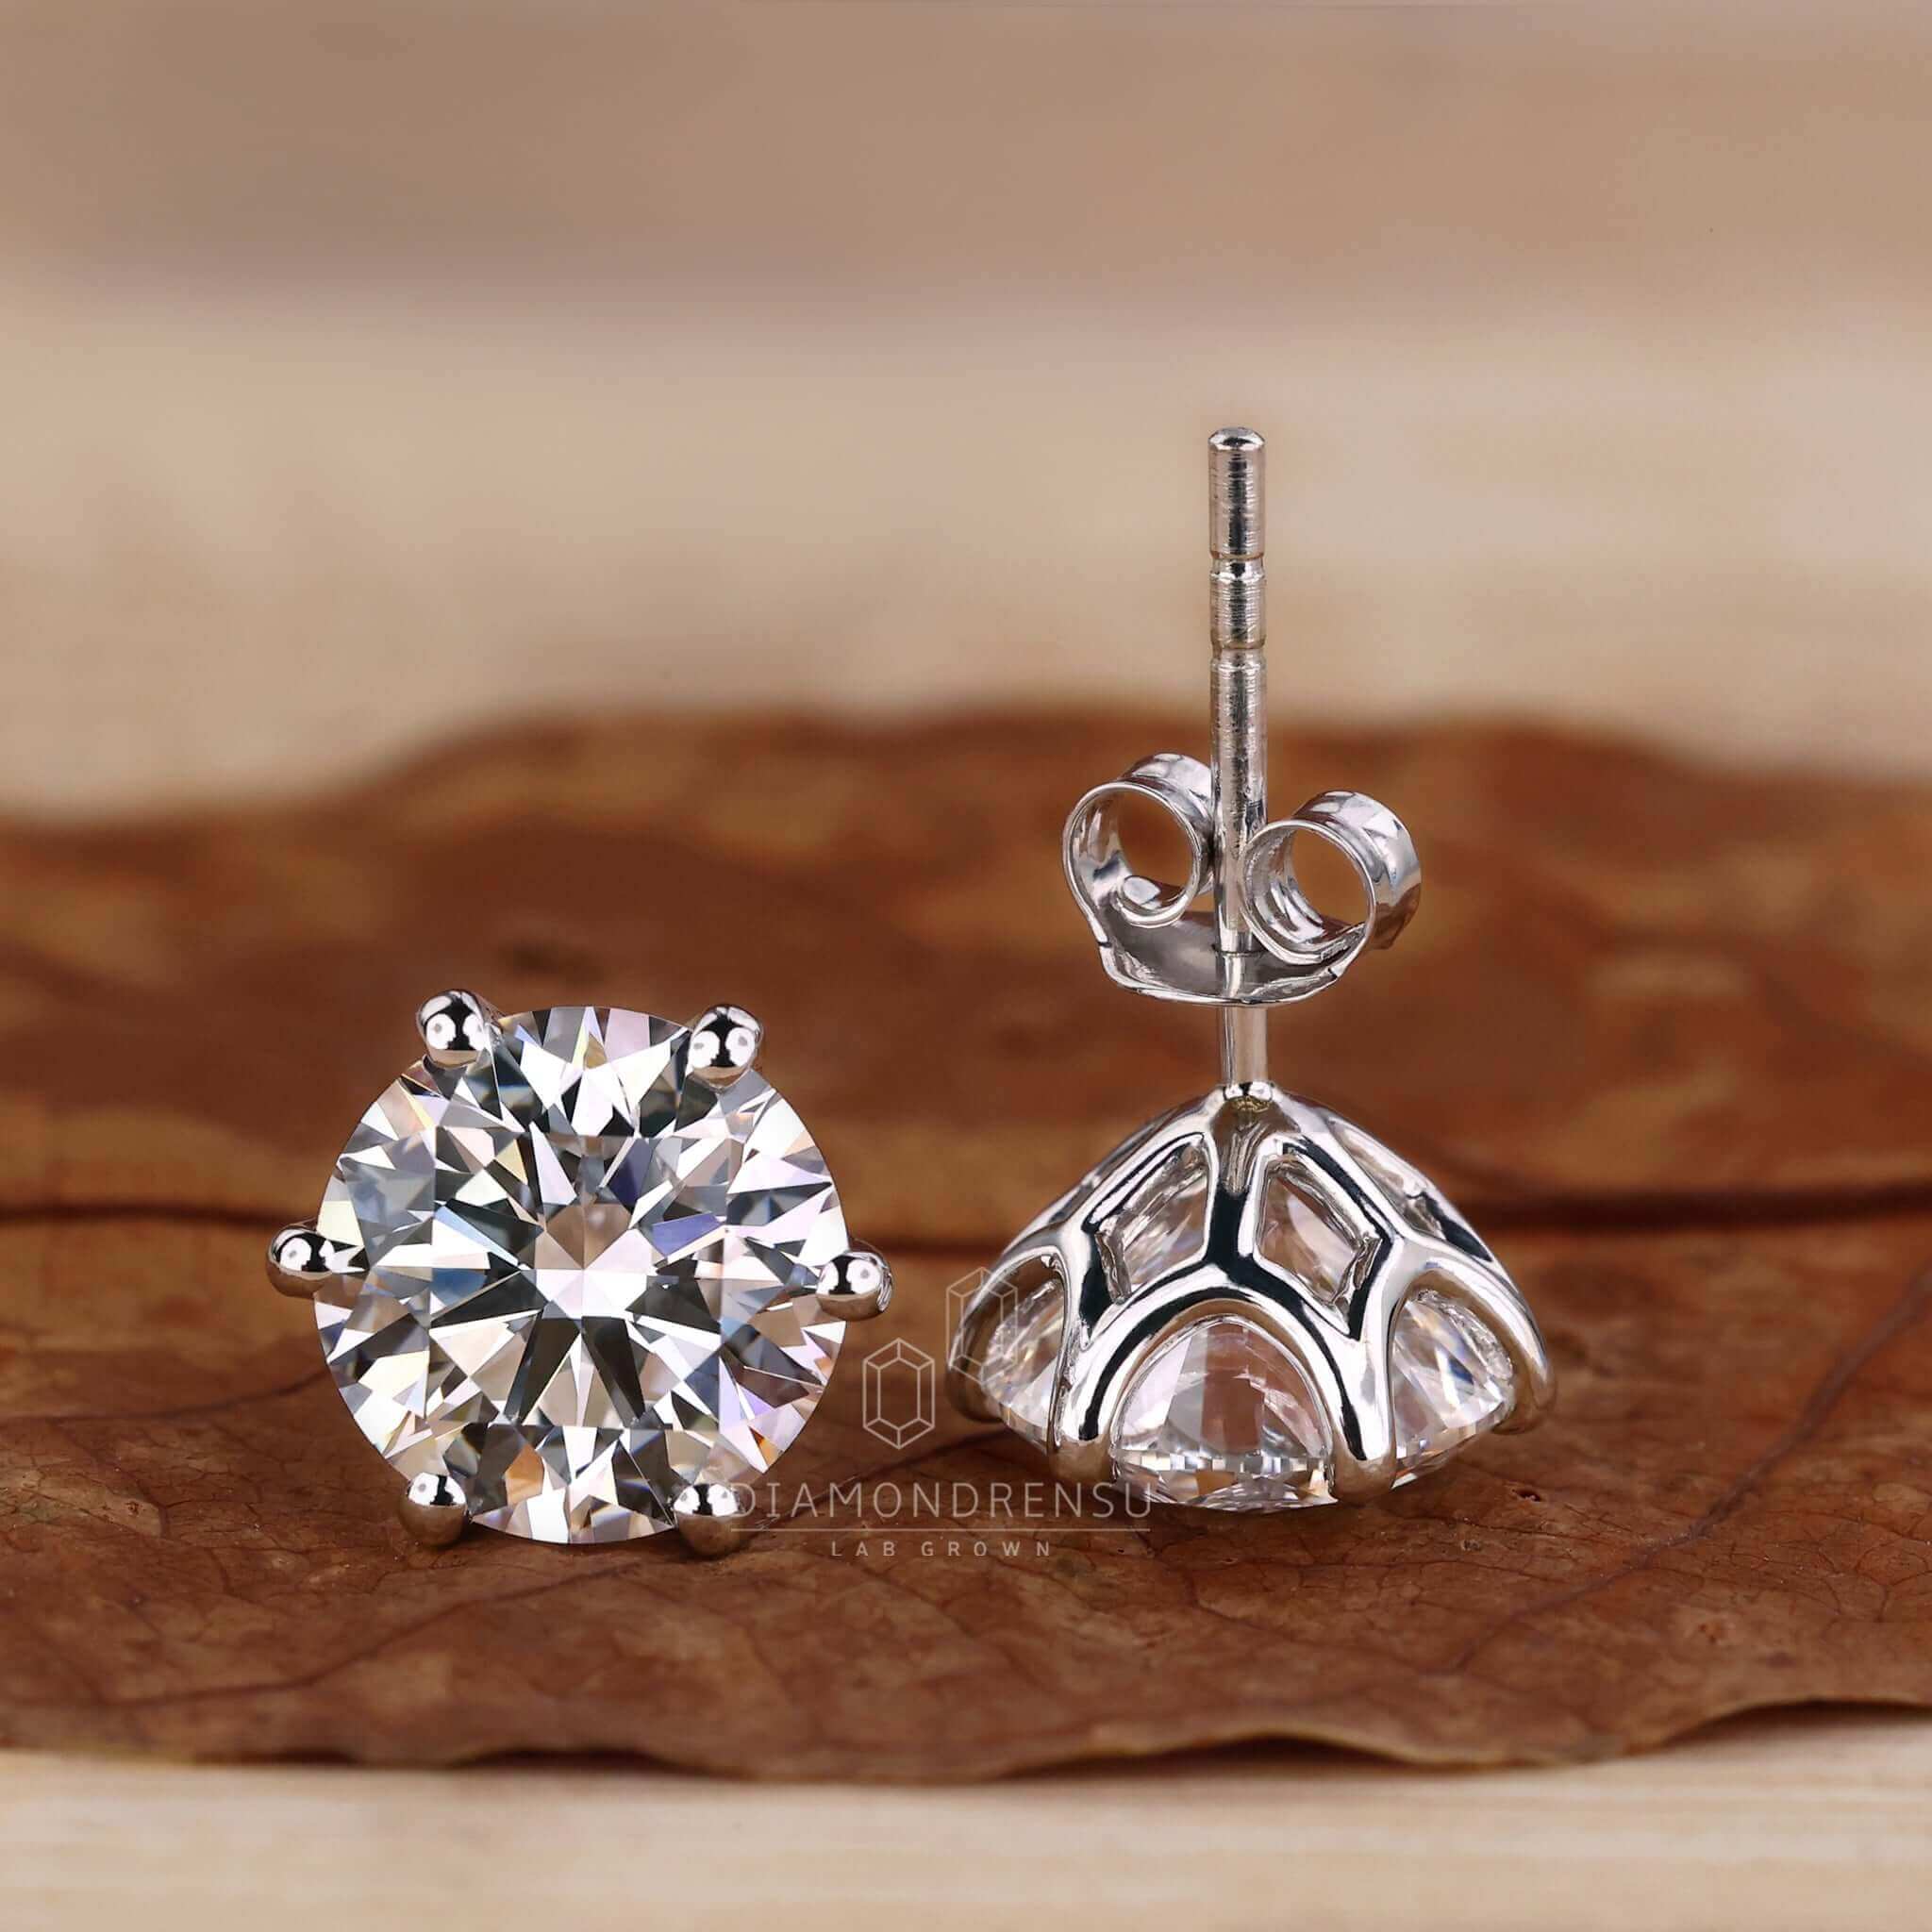 Dainty studs I Small silver round earrings – IIOO.jewelry